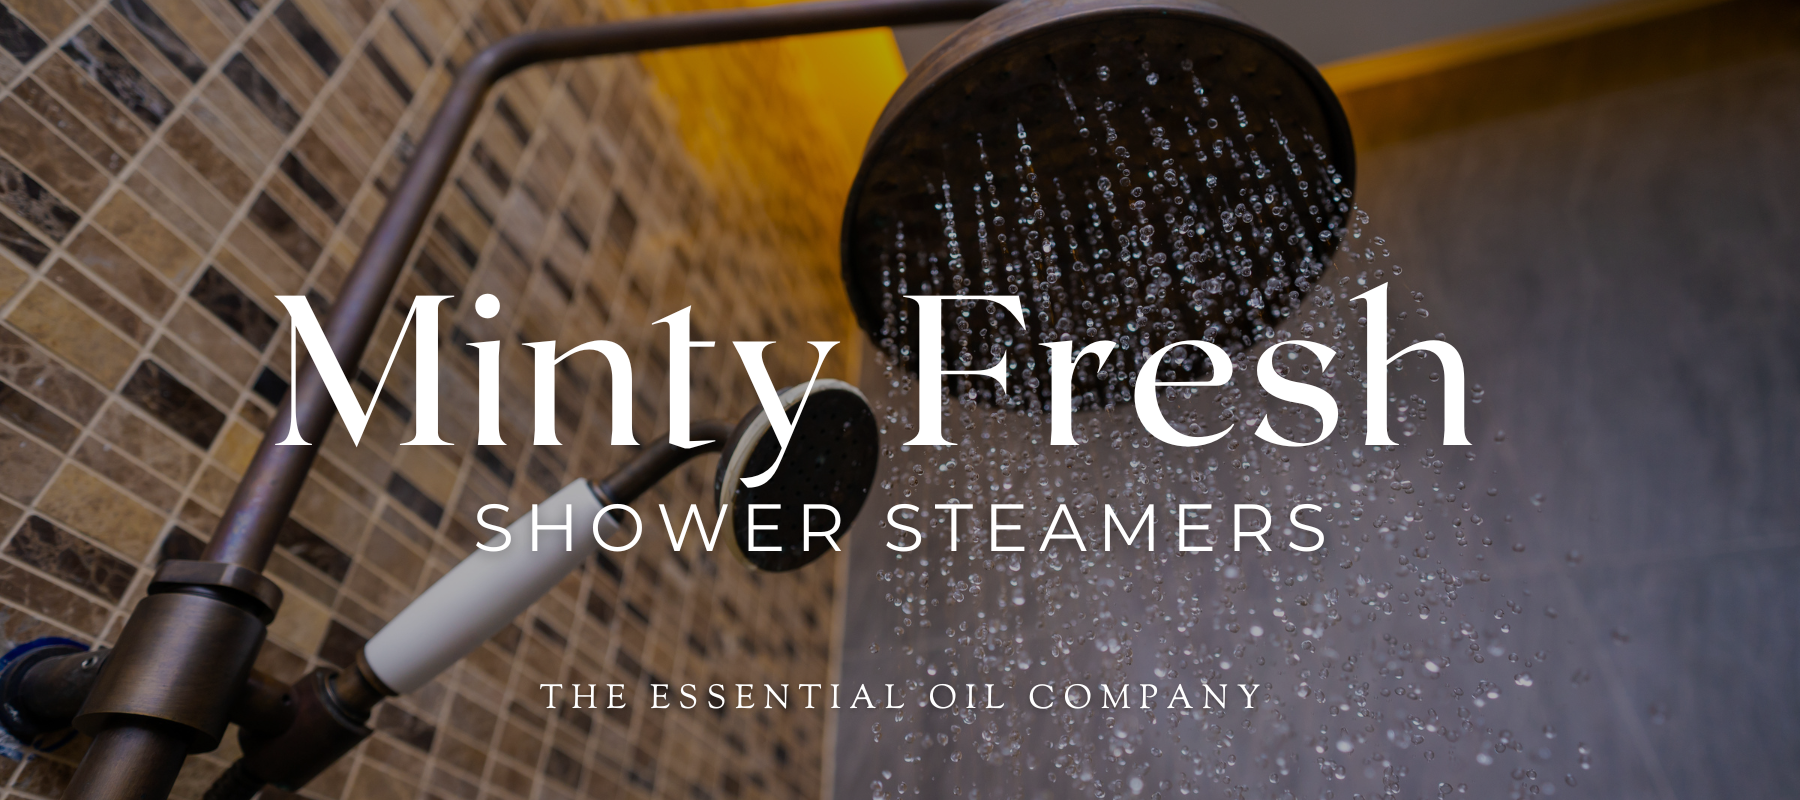 Minty Fresh Shower Steamers